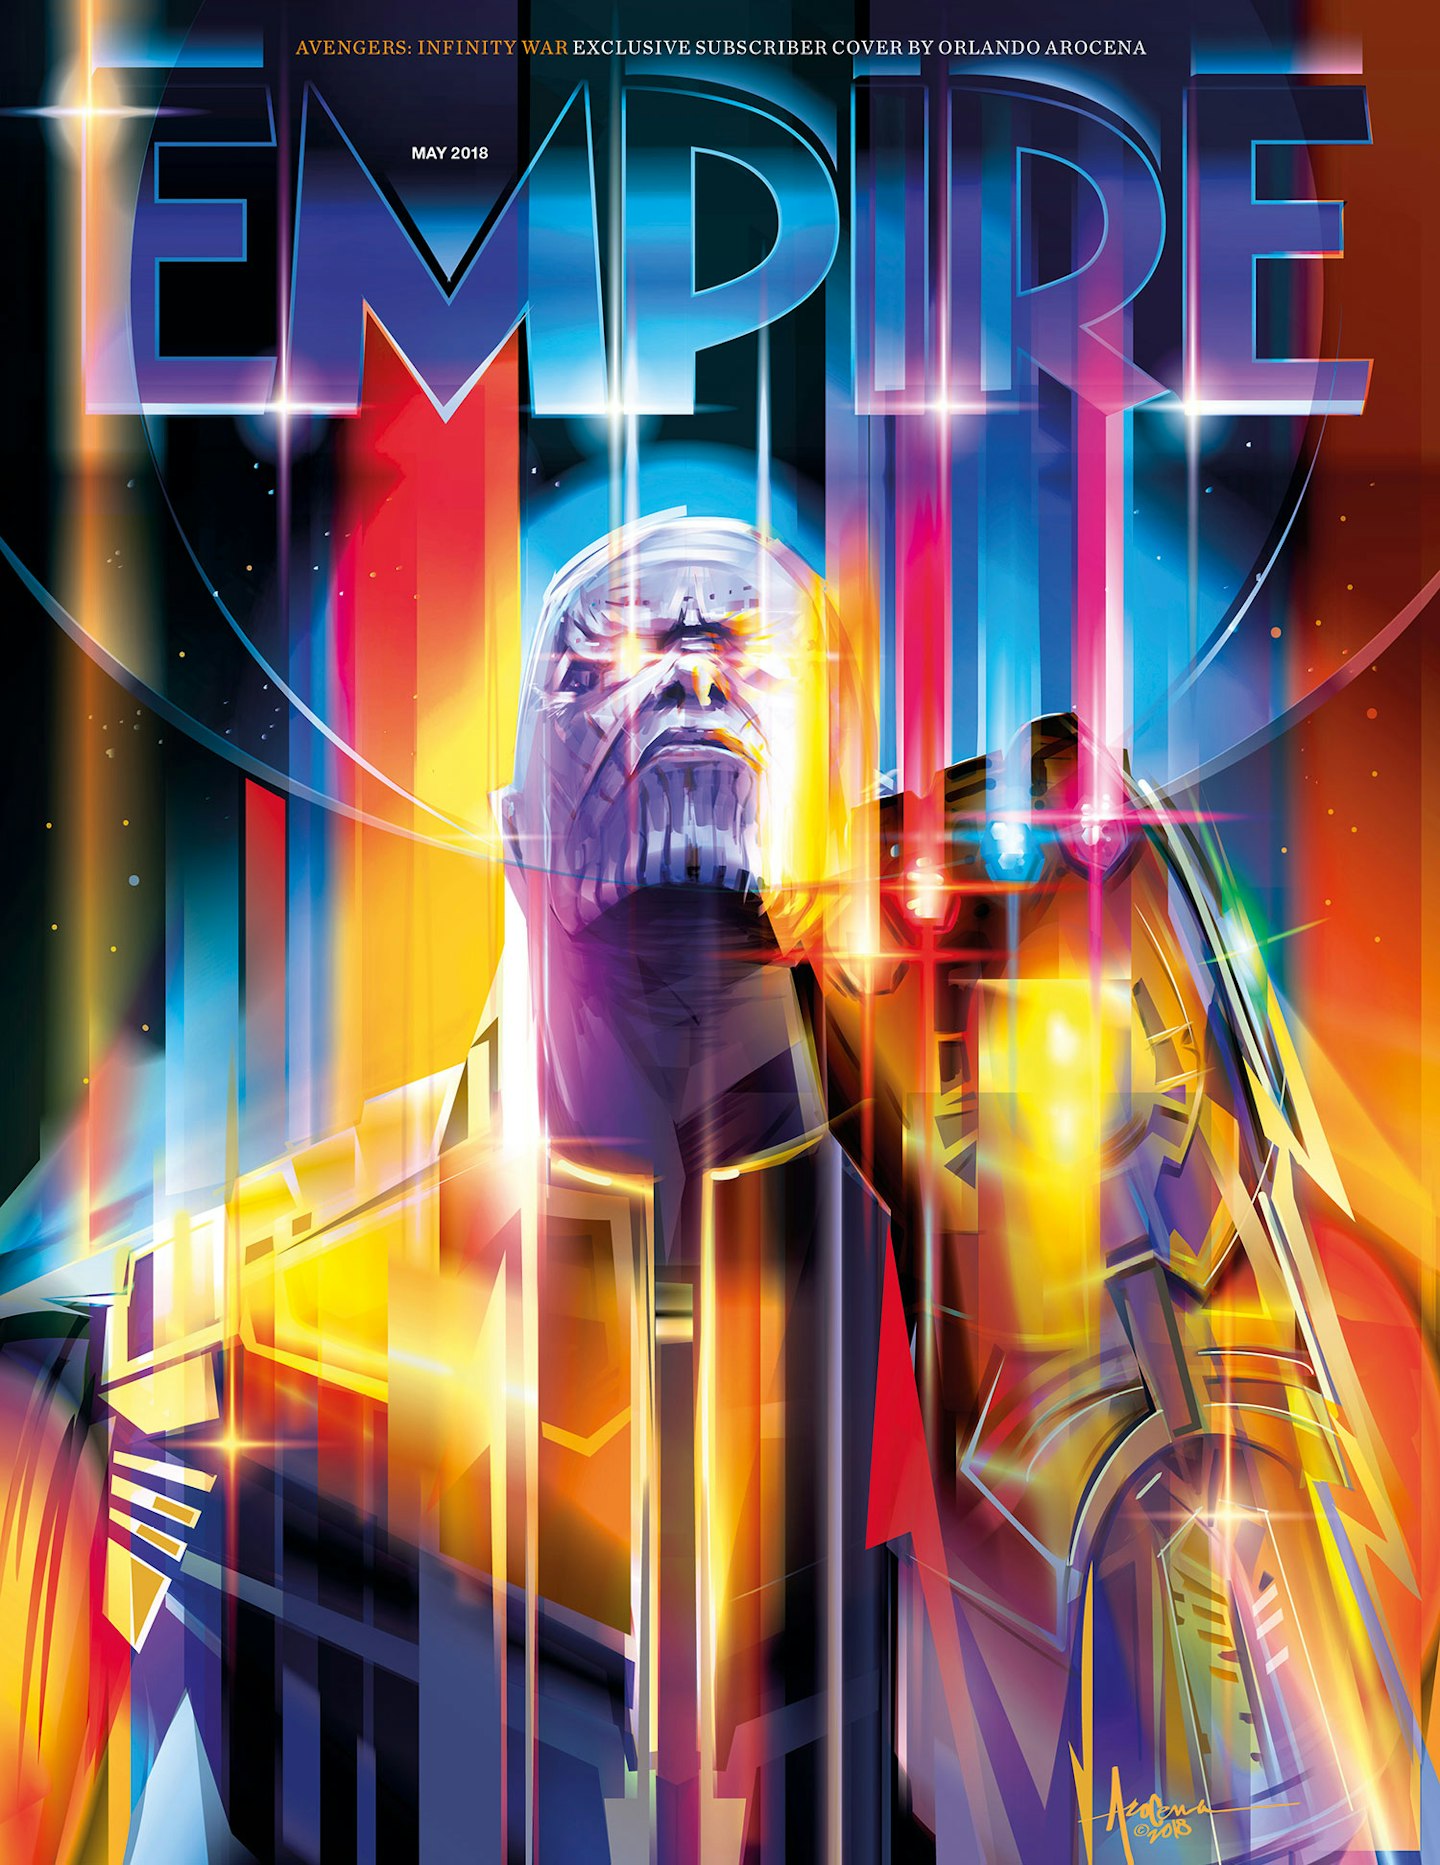 Empire - May 2018 subscriber cover / Thanos